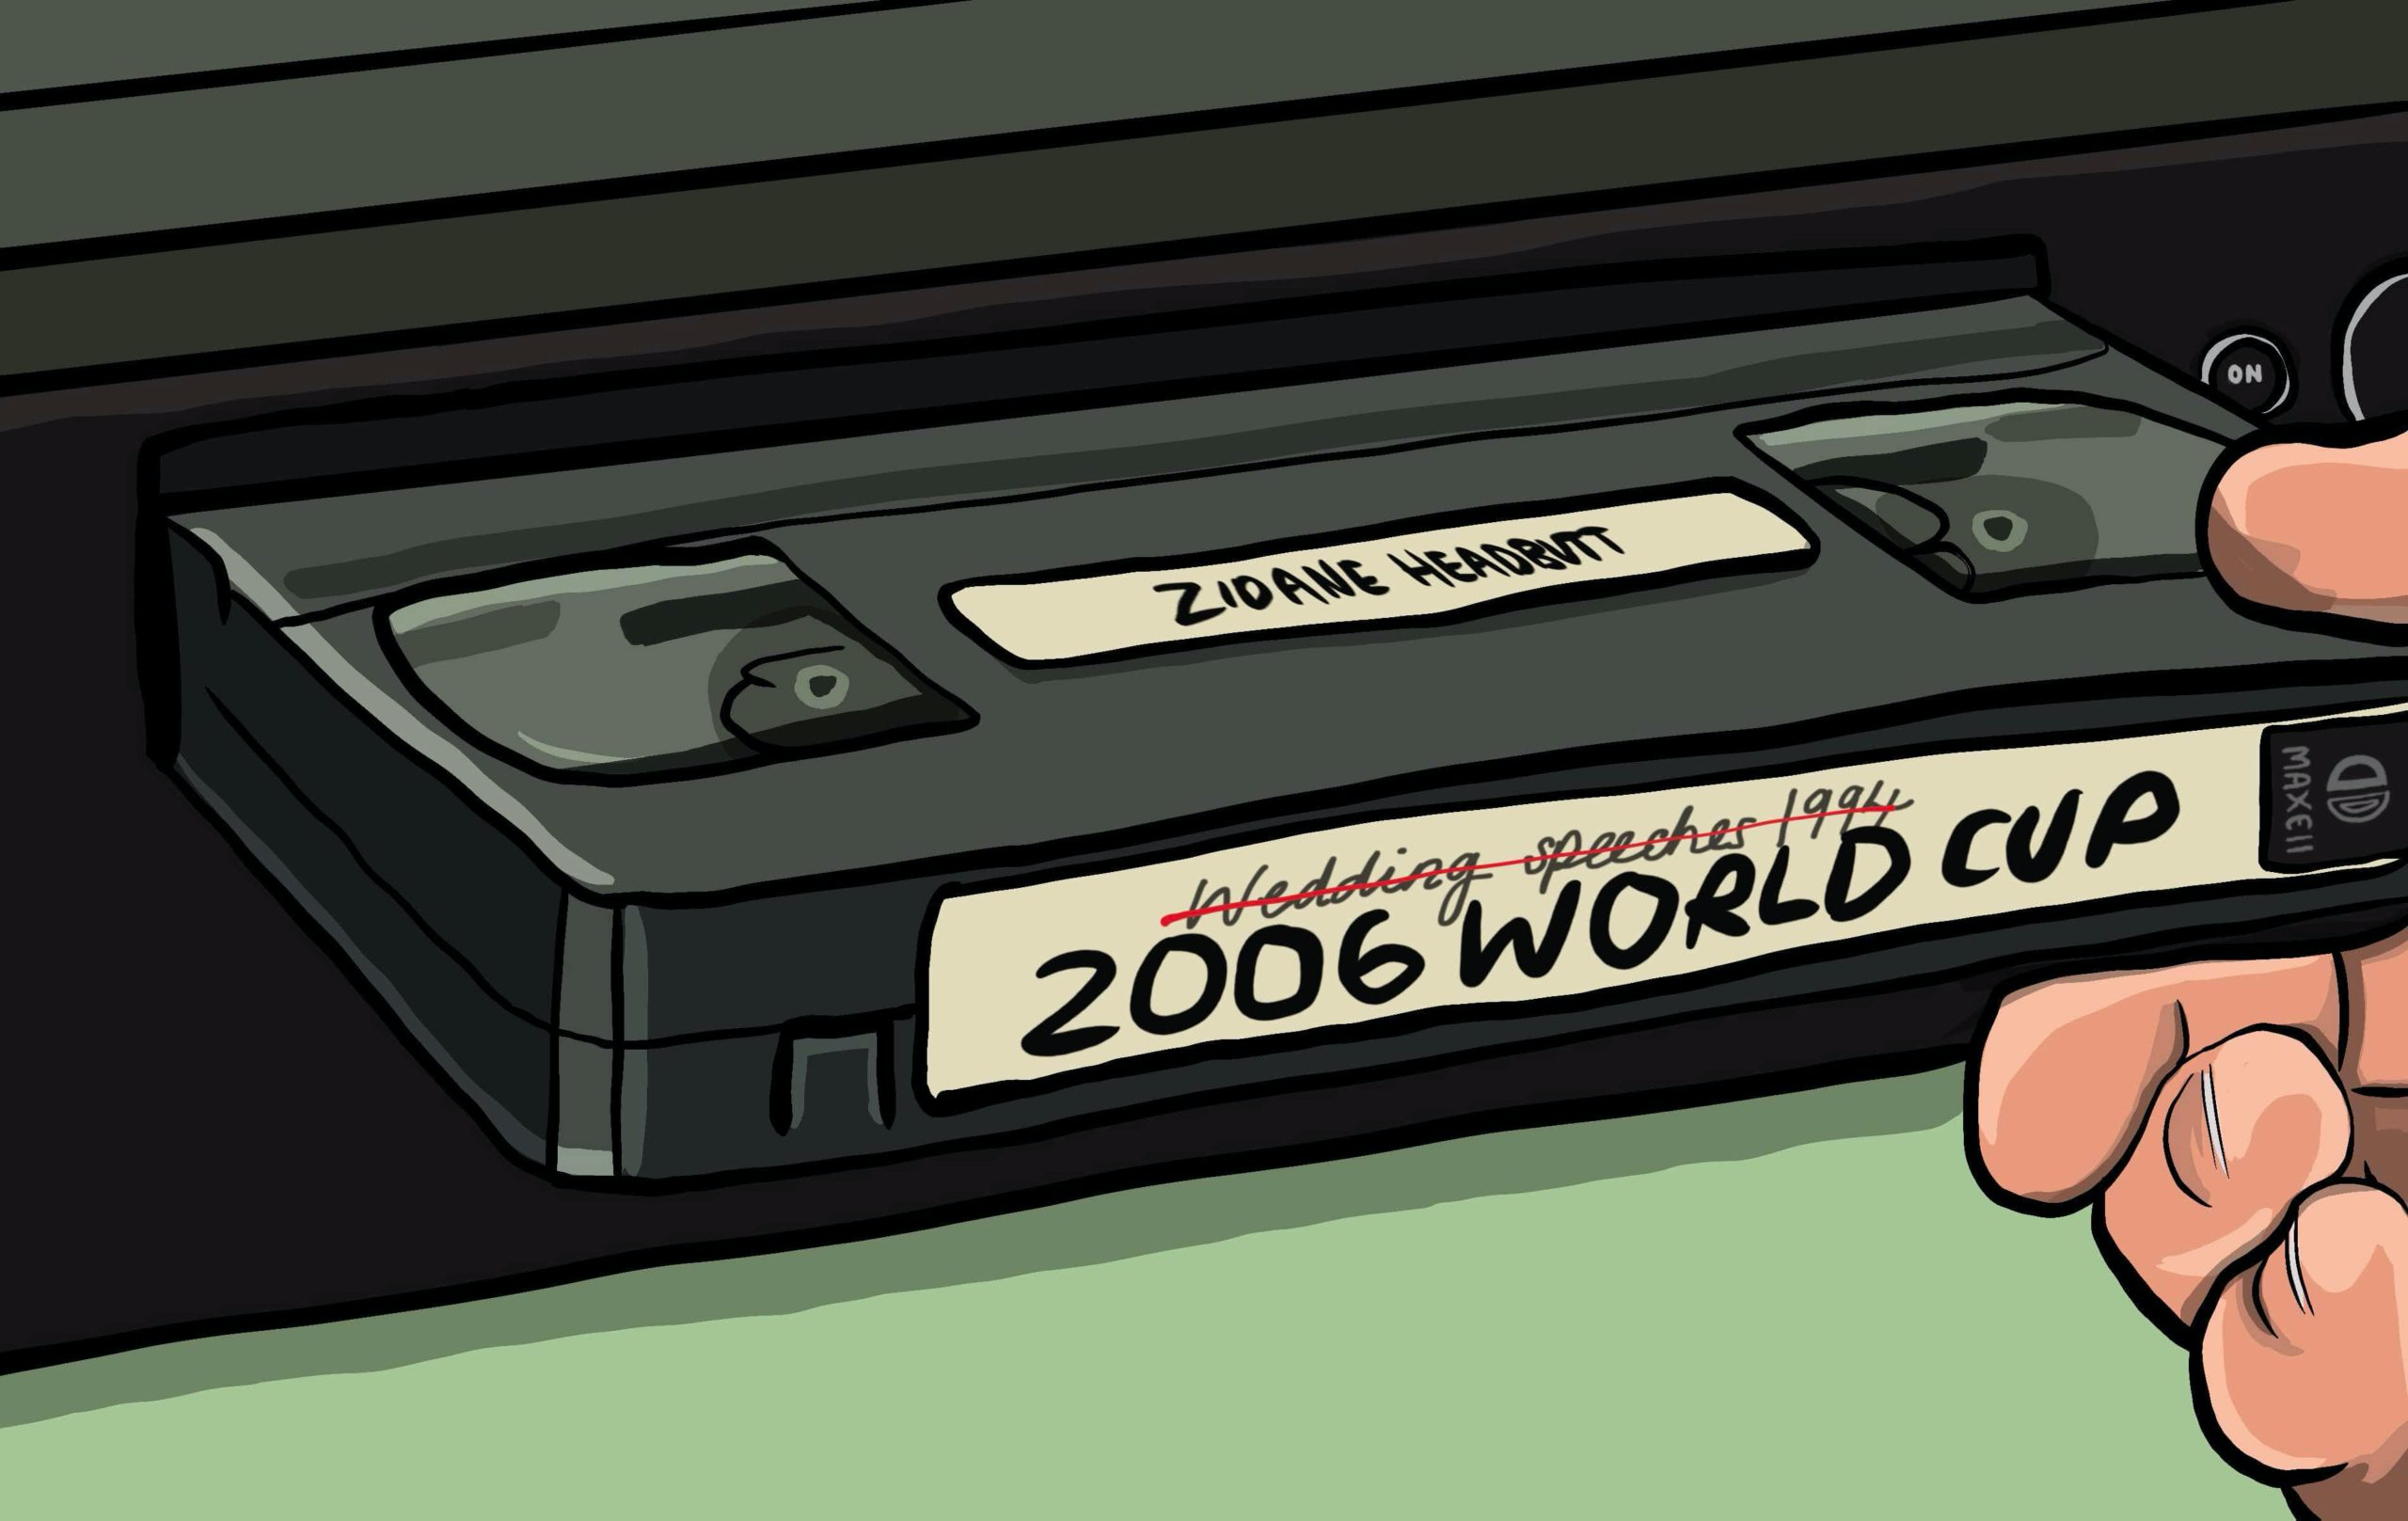 A video Cassette Tape with wedding speech crossed out and 2006 world cup zidane headbutt instead written